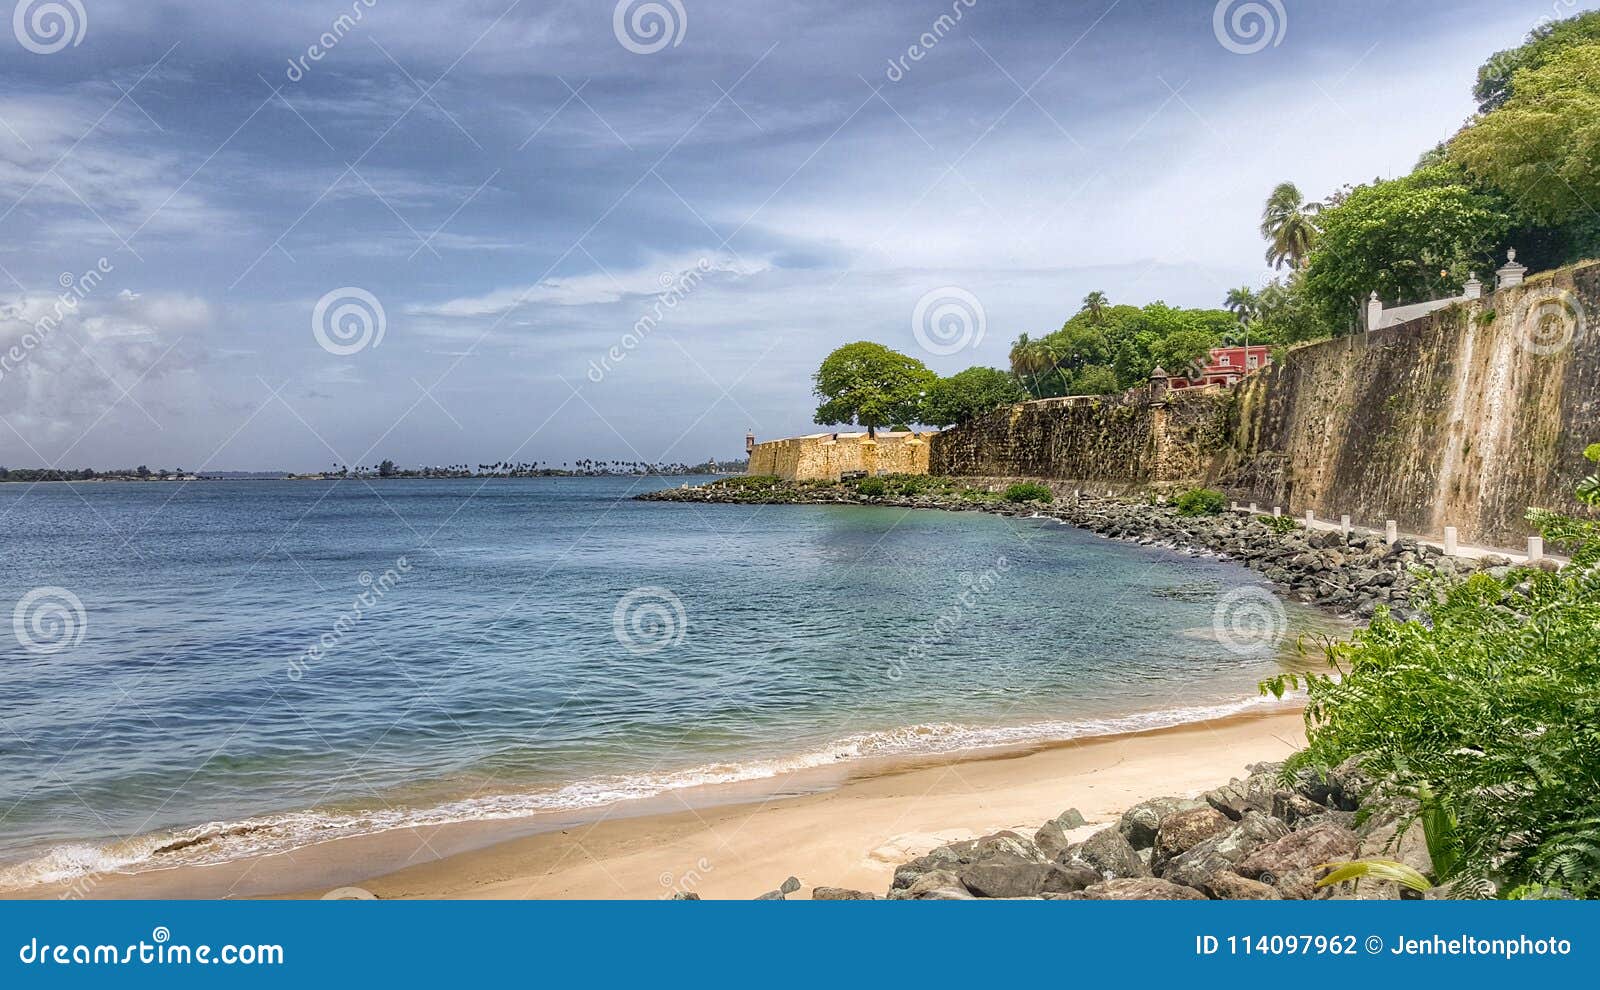 Beach And City Walls In Old San Juan Puerto Rico Stock Photo Image Of Landmark Fort